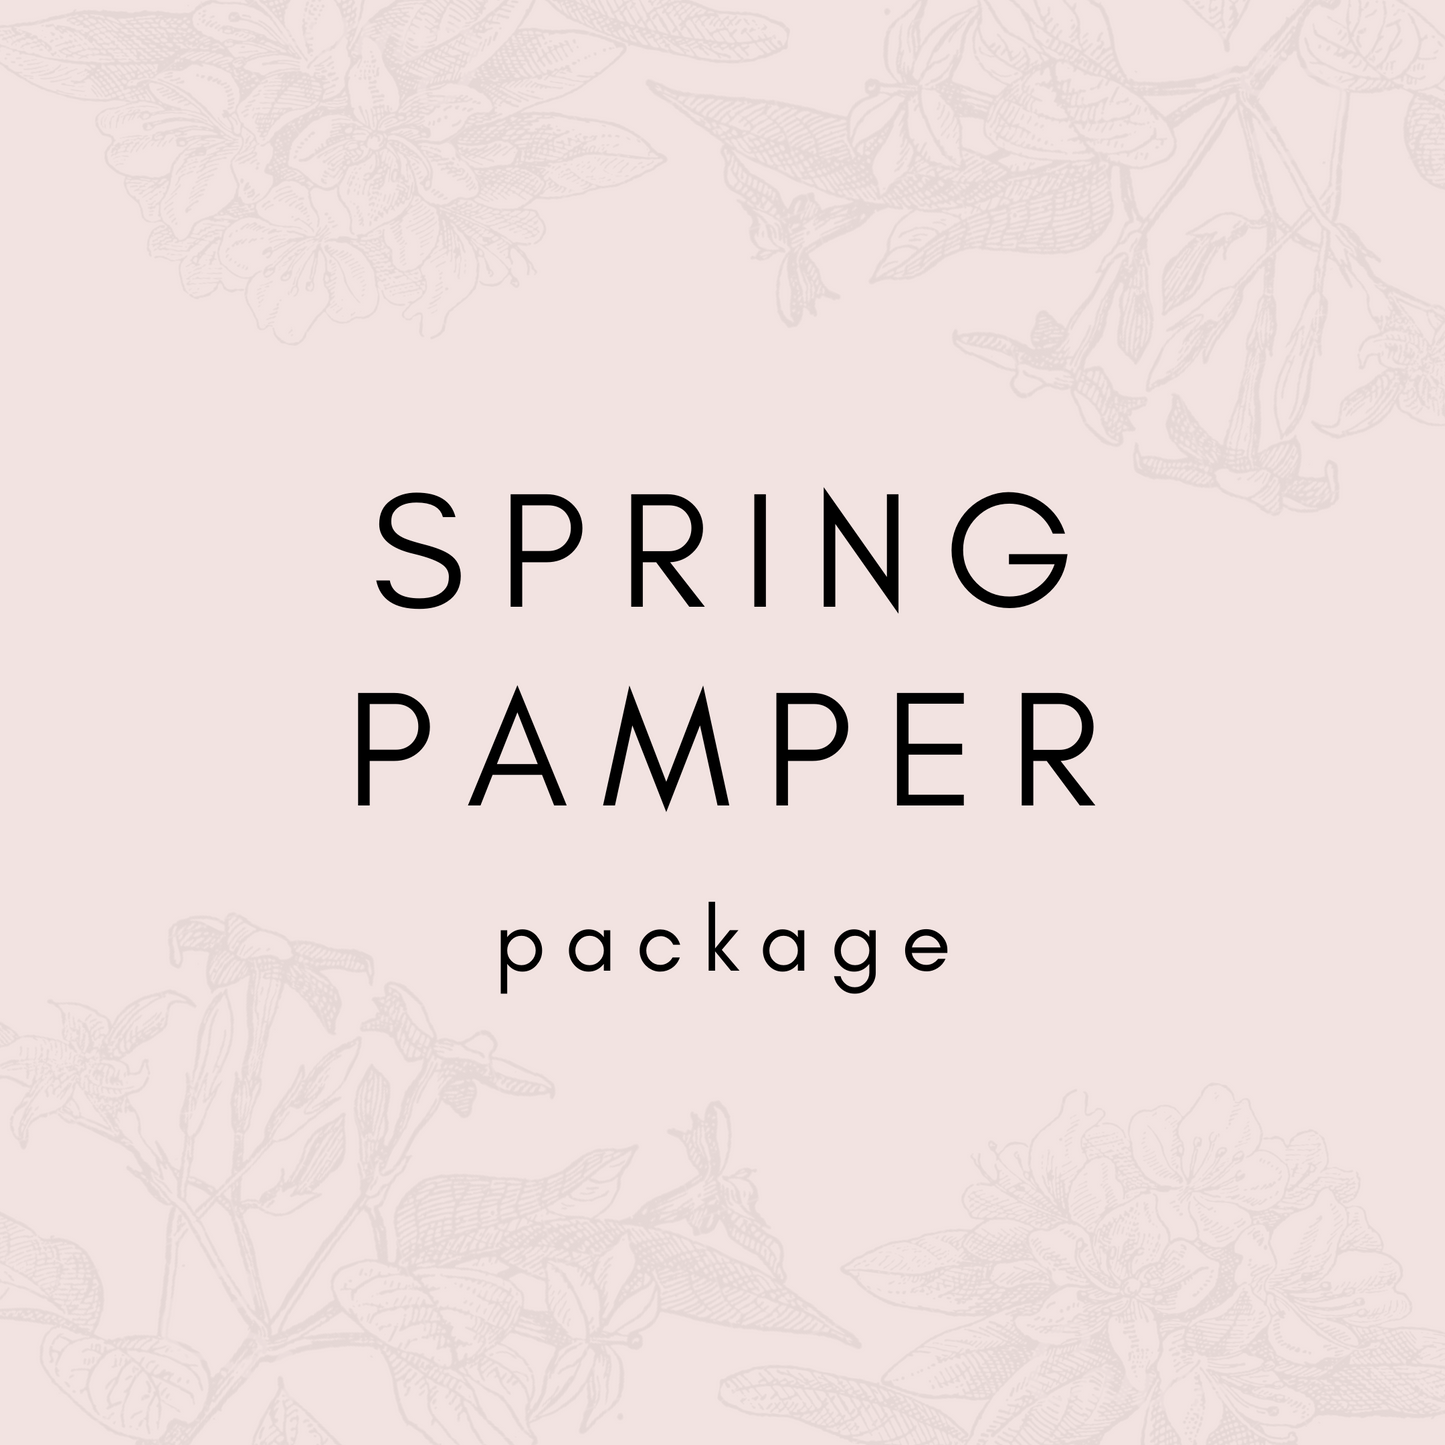 Spring Pamper Package